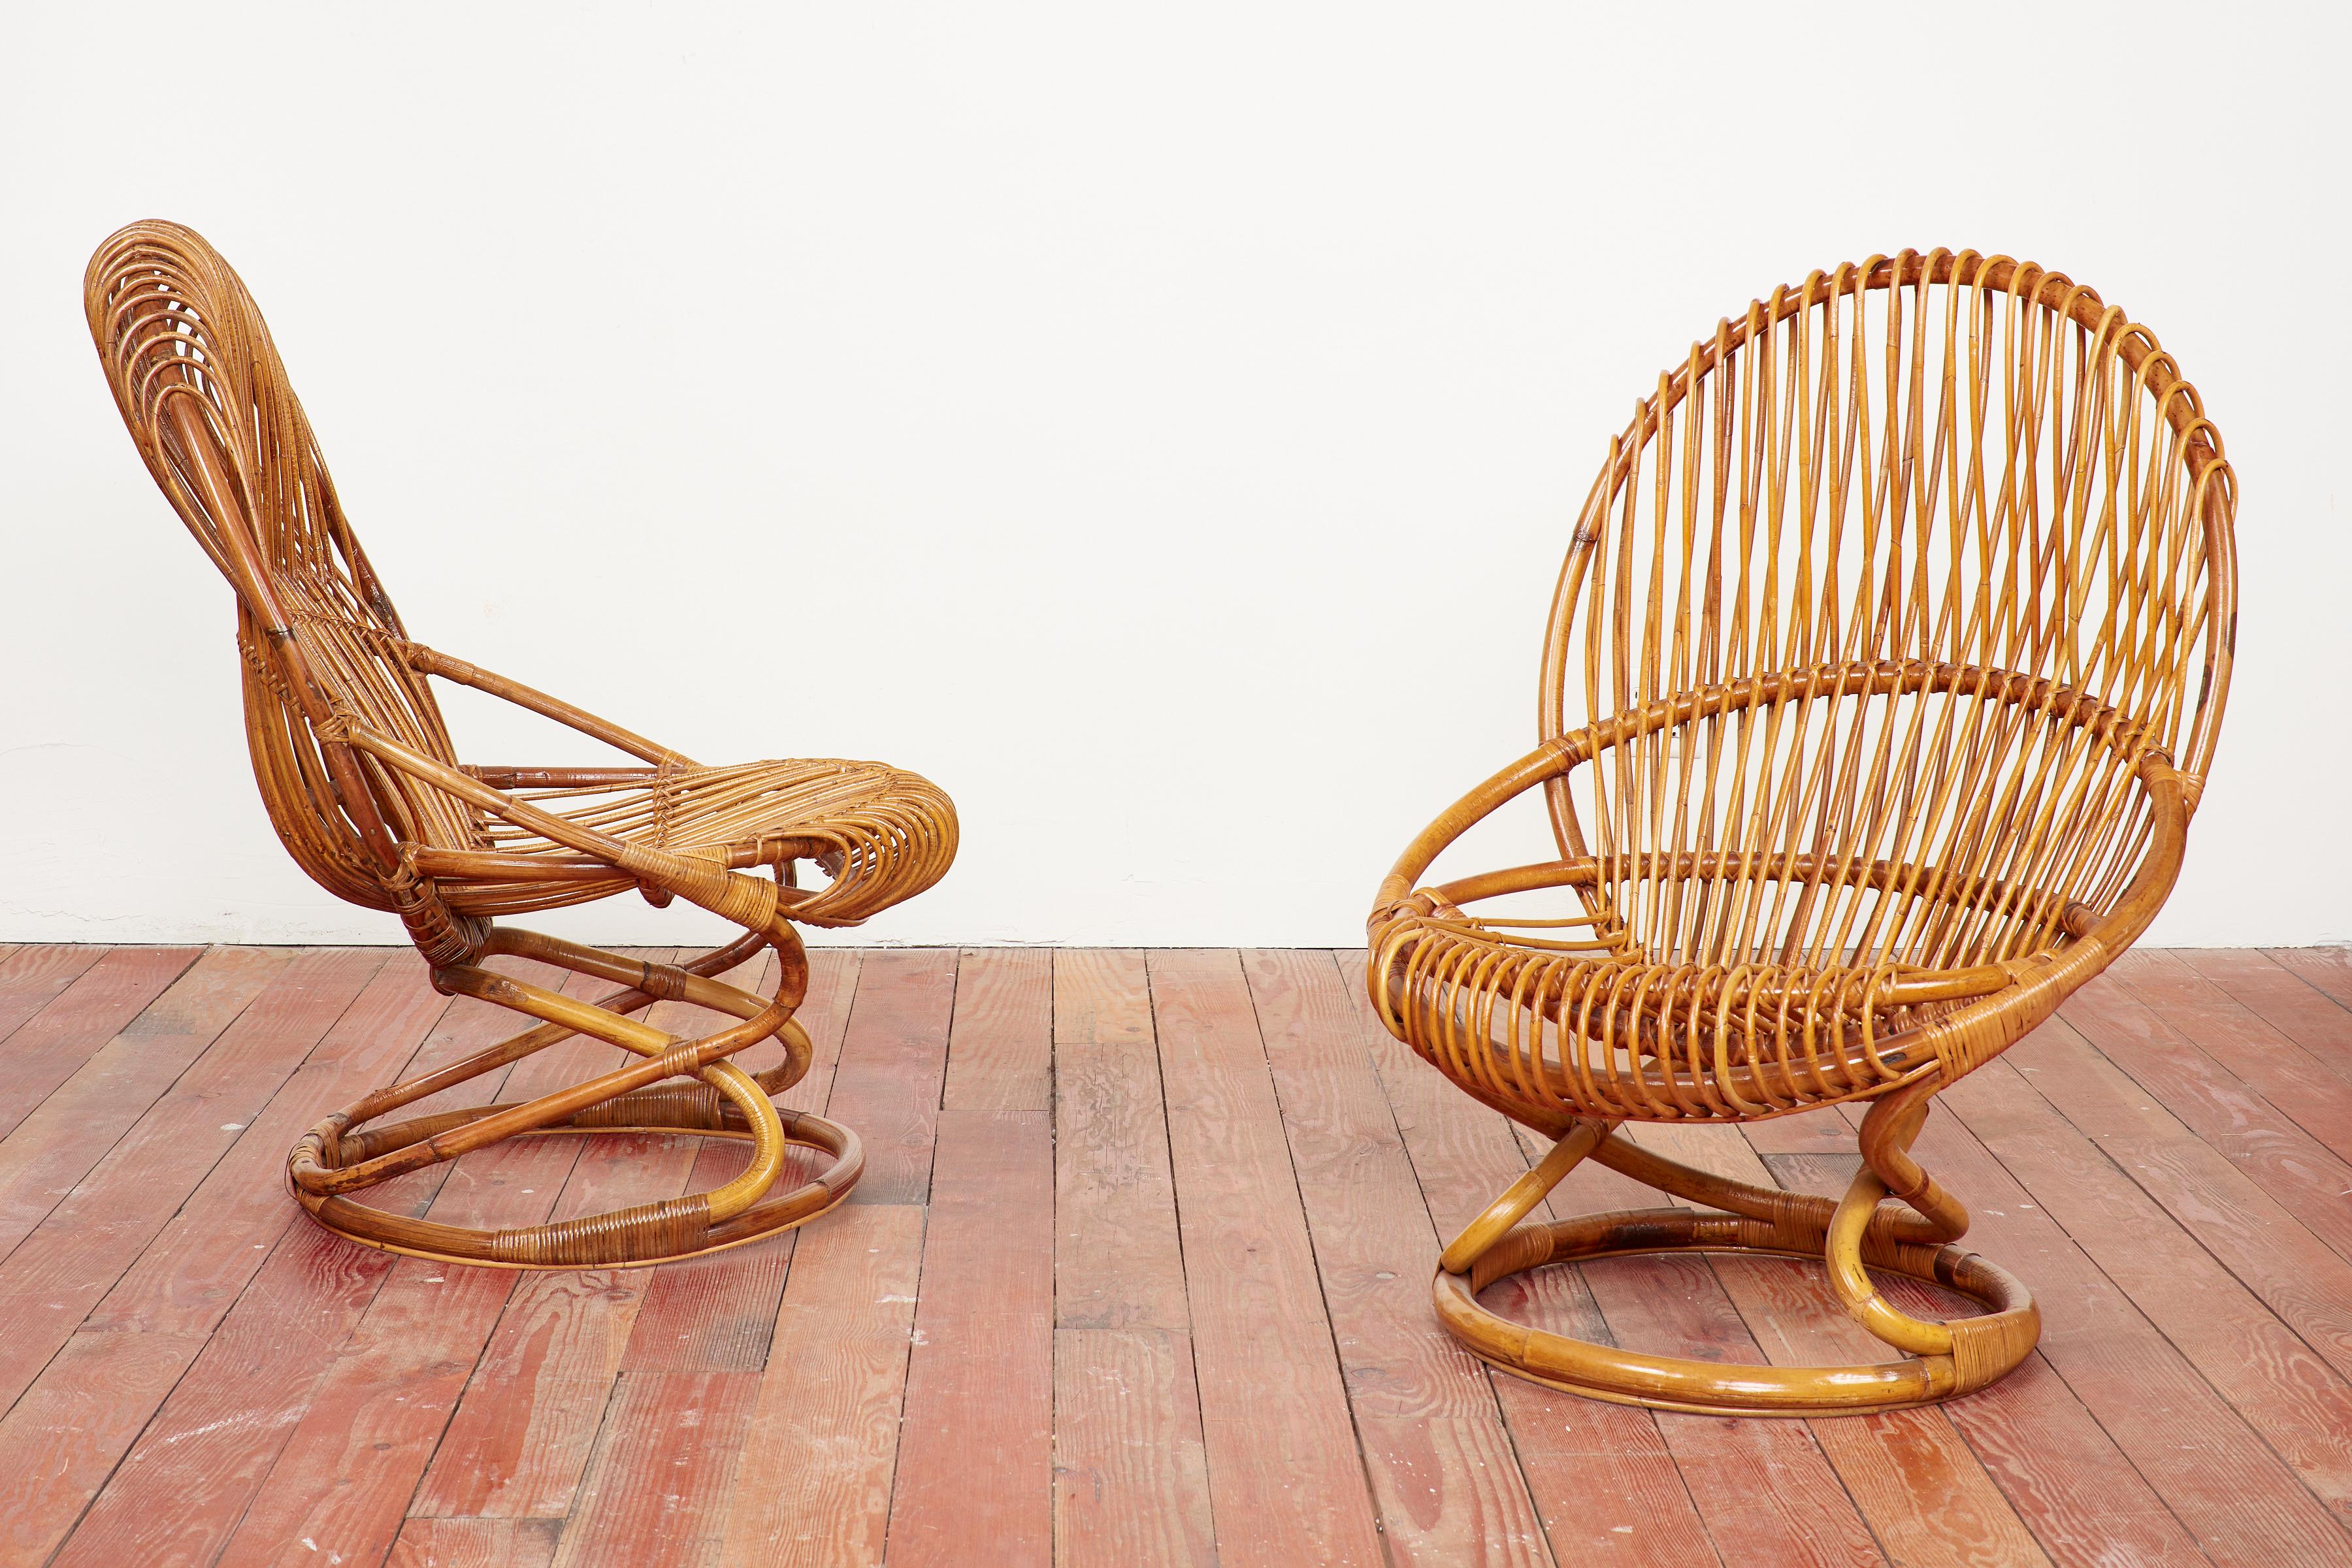 Tito Agnoli chairs for Bonacina, Italy, circa 1950s
Great sculptural 